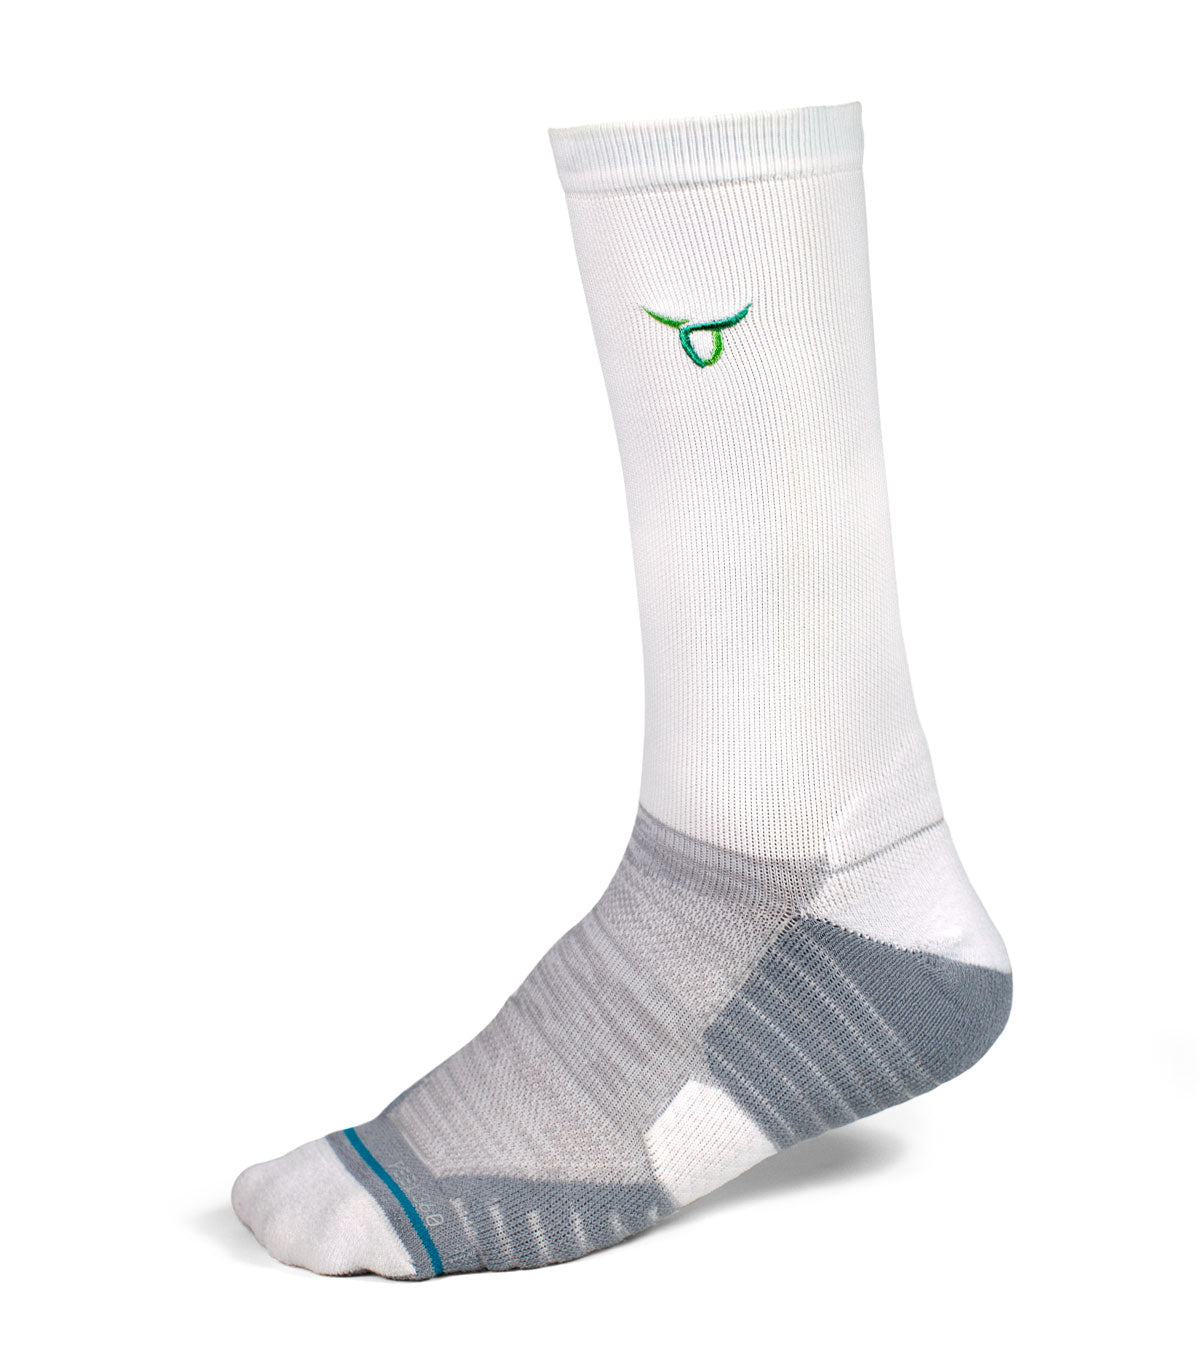 Homegrown x Stance Socks Collab - White